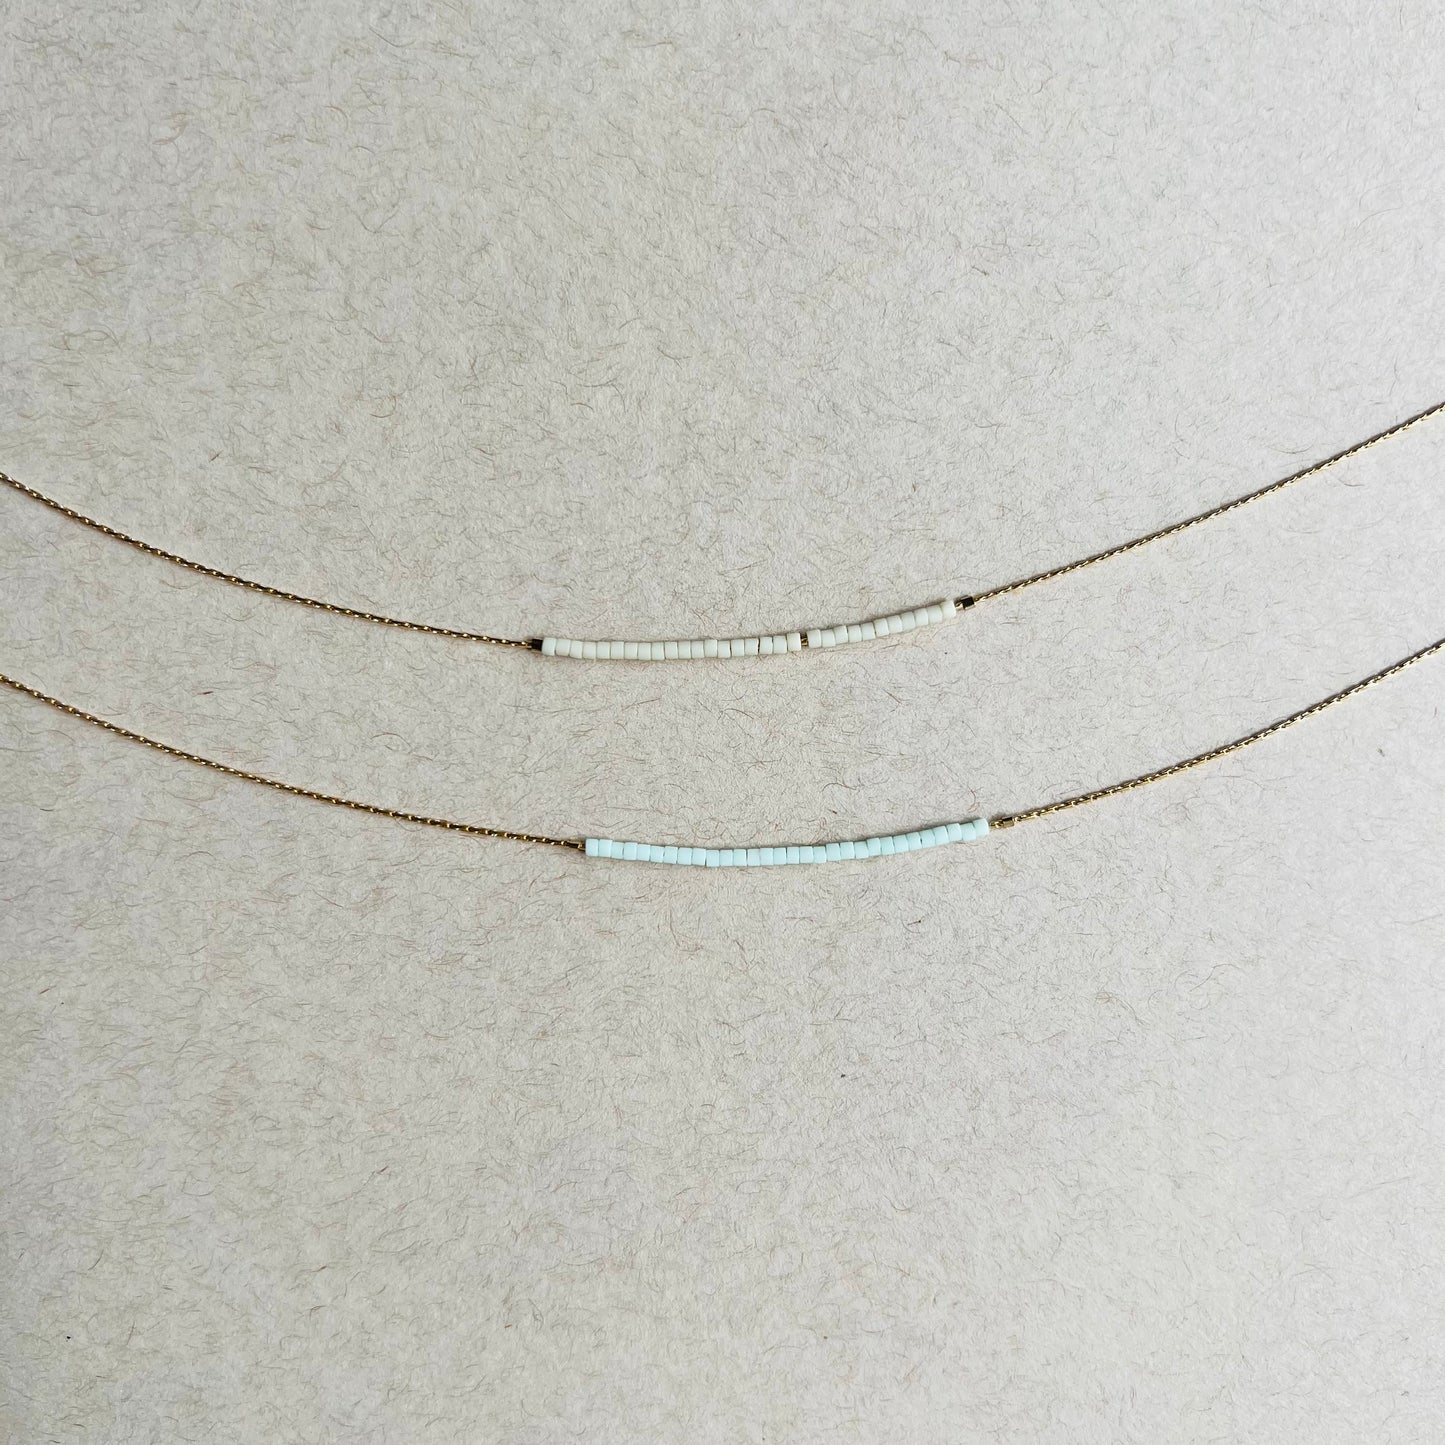 Minimal Beaded Necklace | Shell